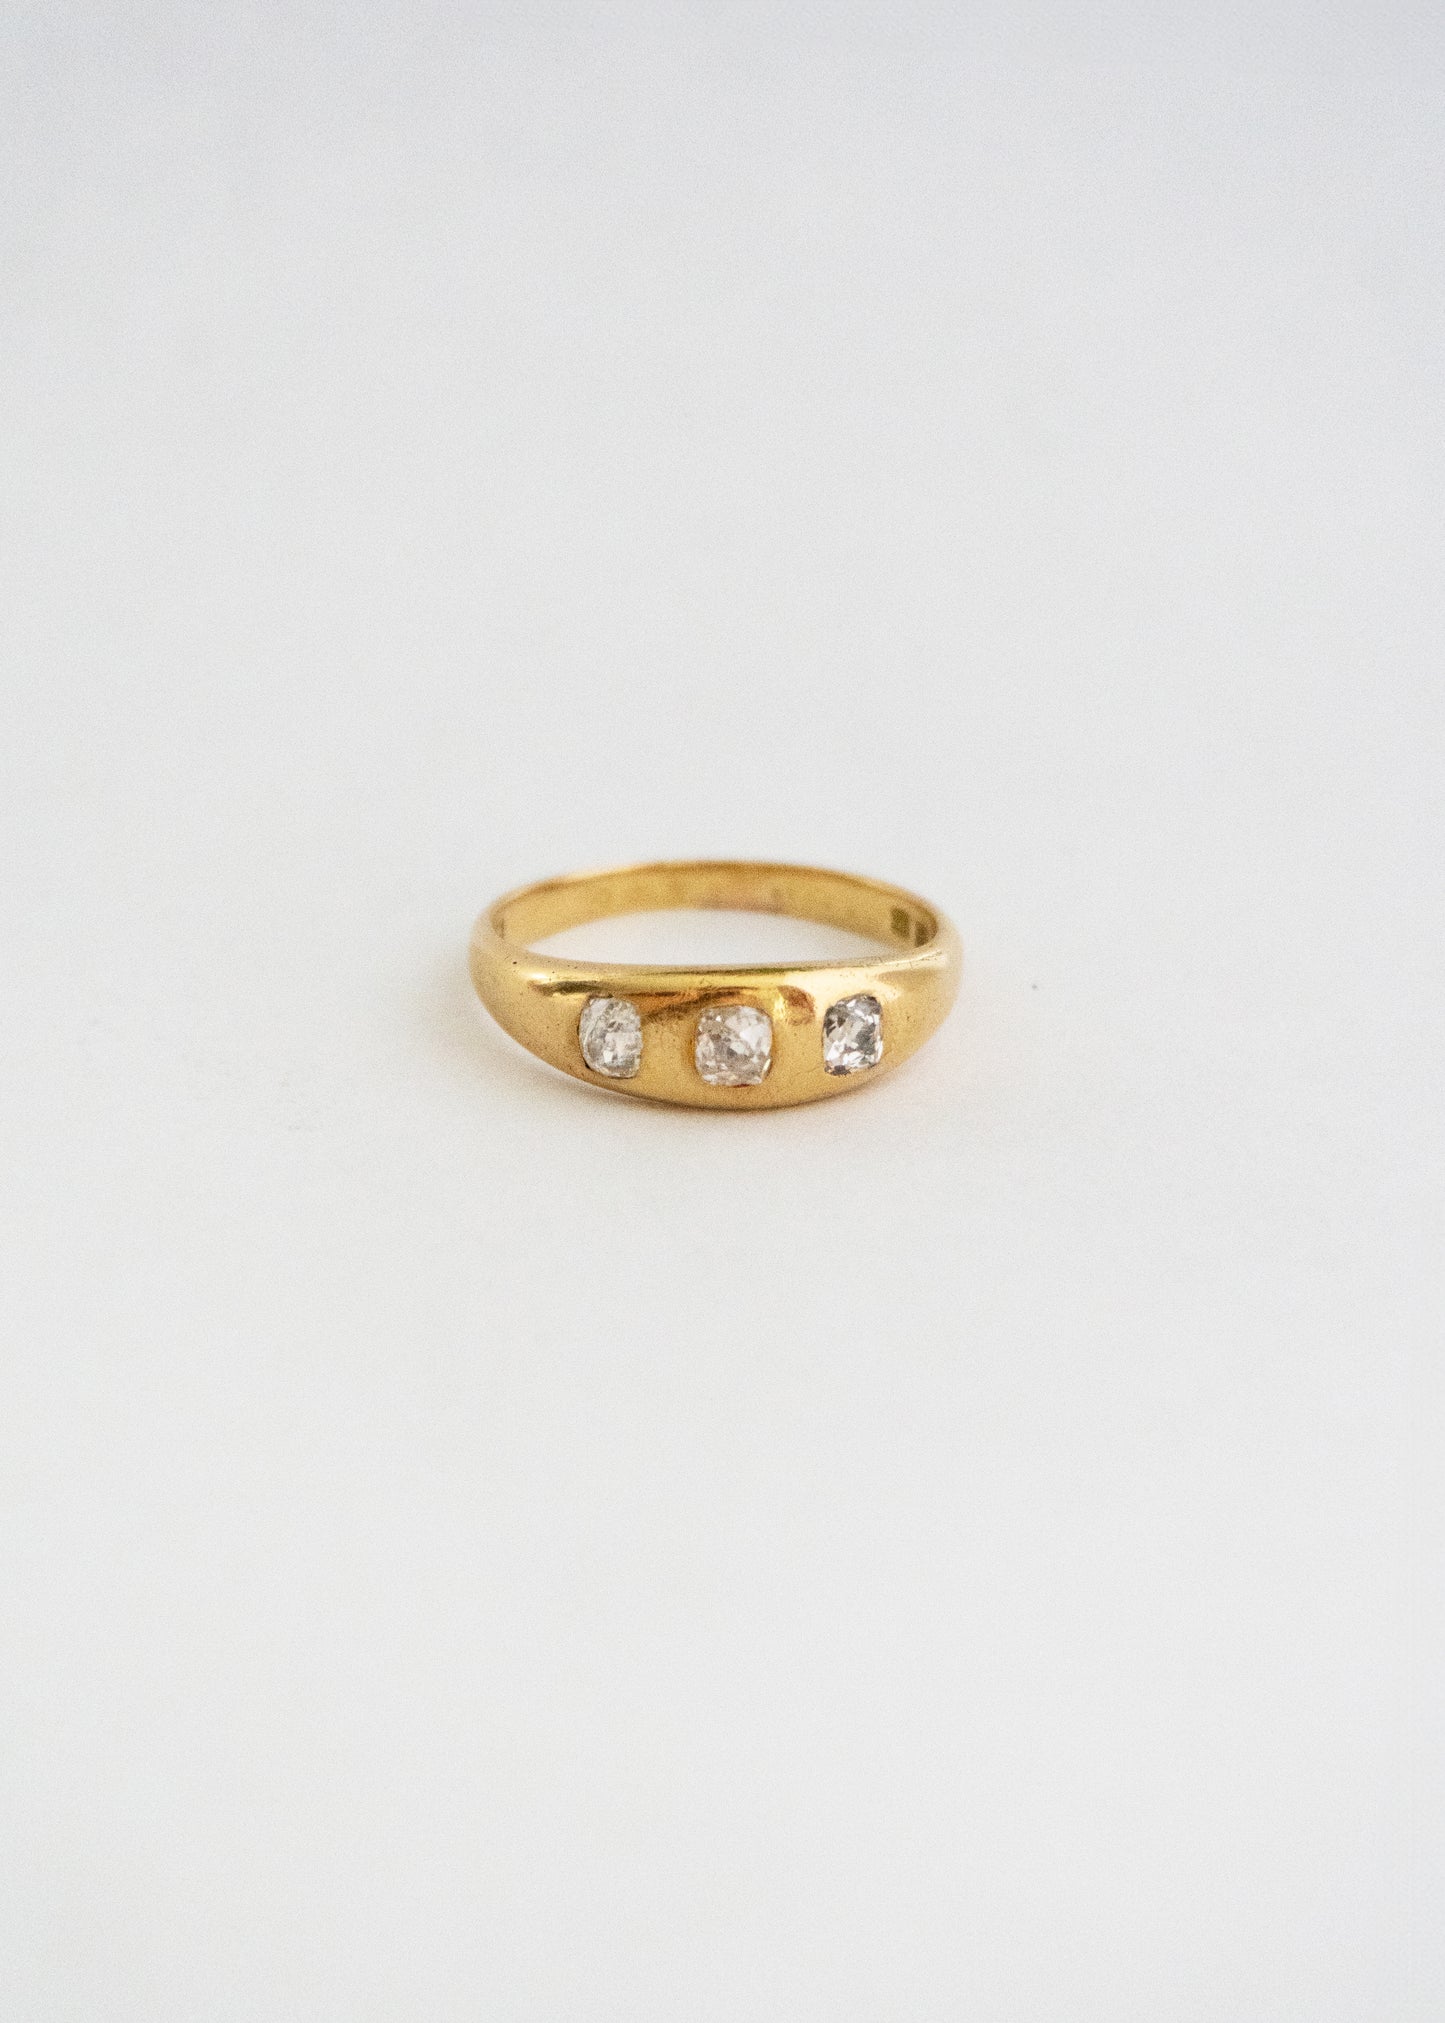 Vintage 3 Diamond Ring